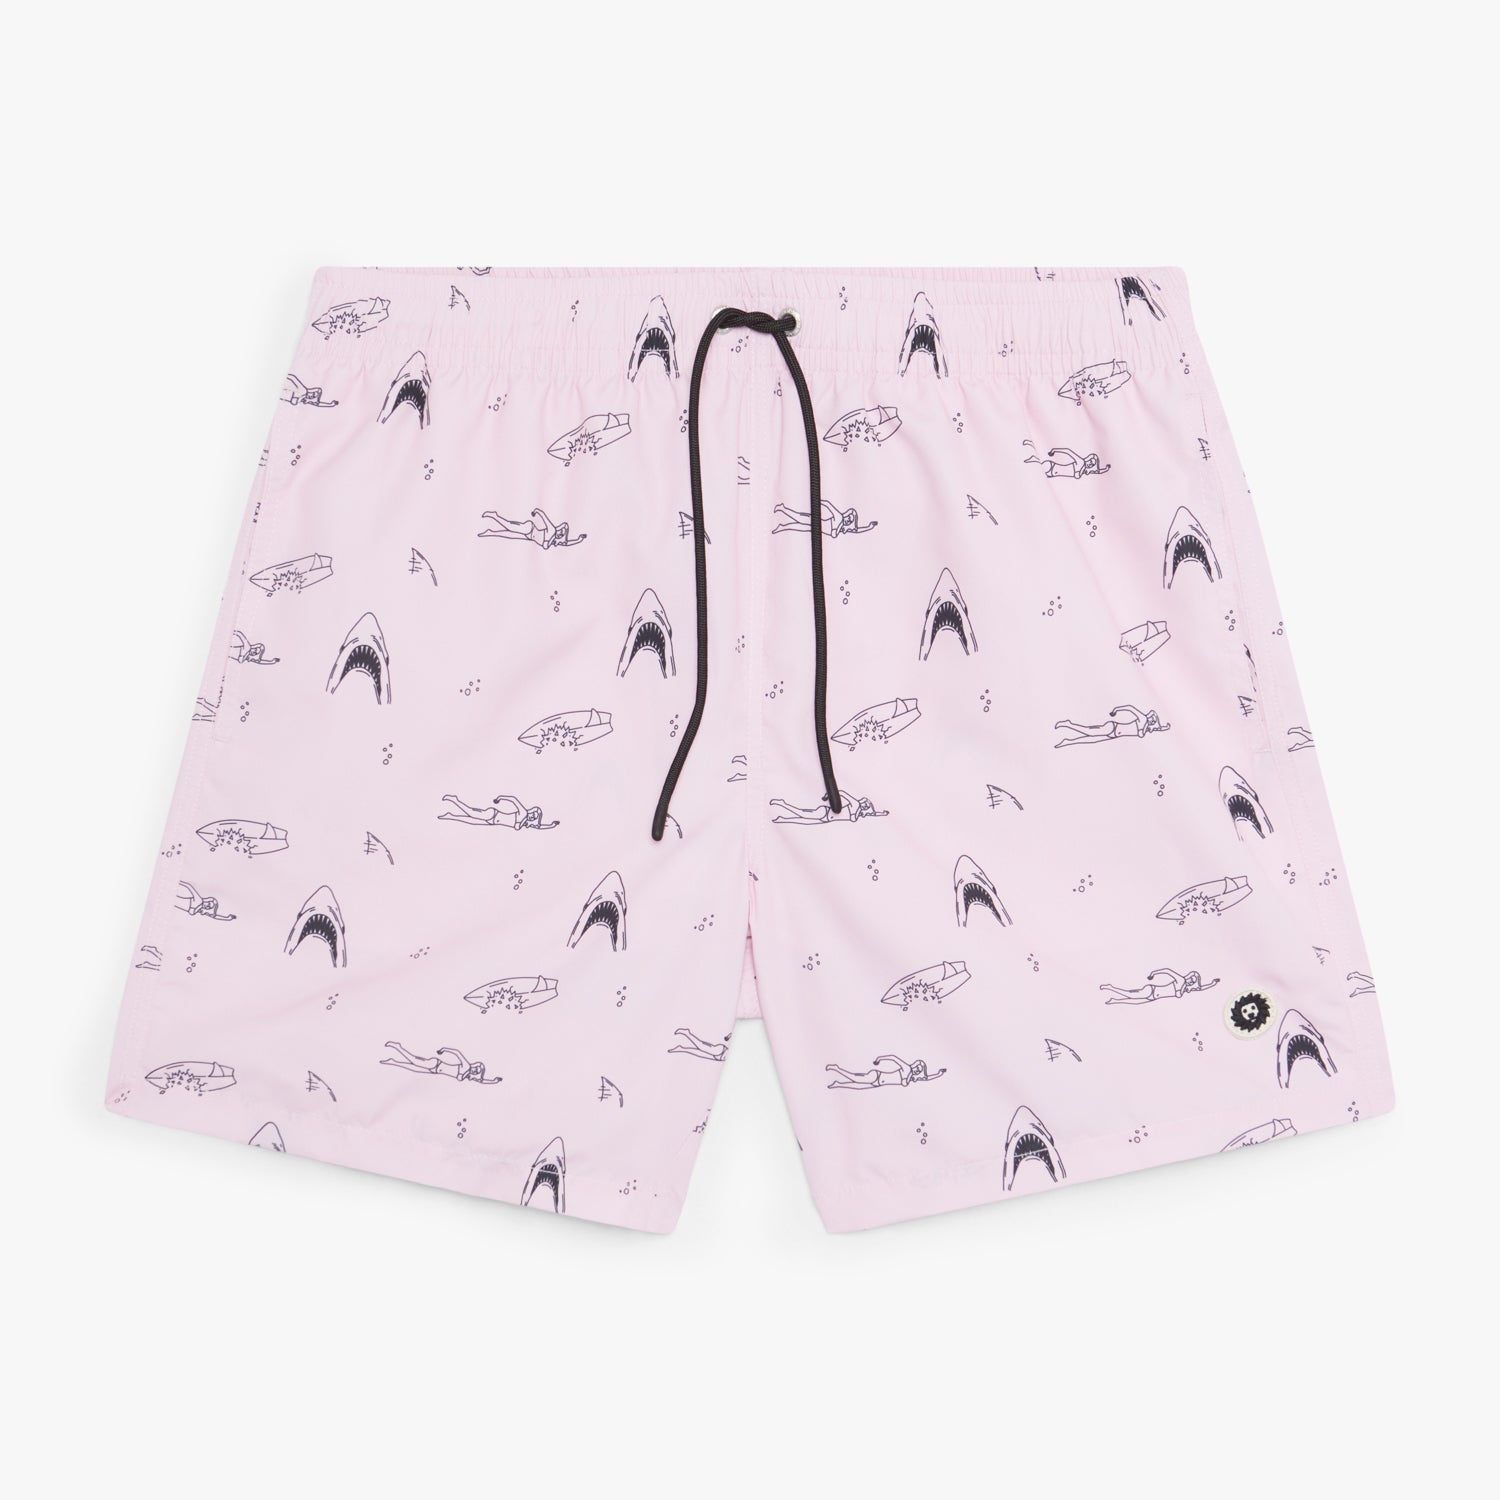 Shark and Swimmer Swim Shorts - Pink